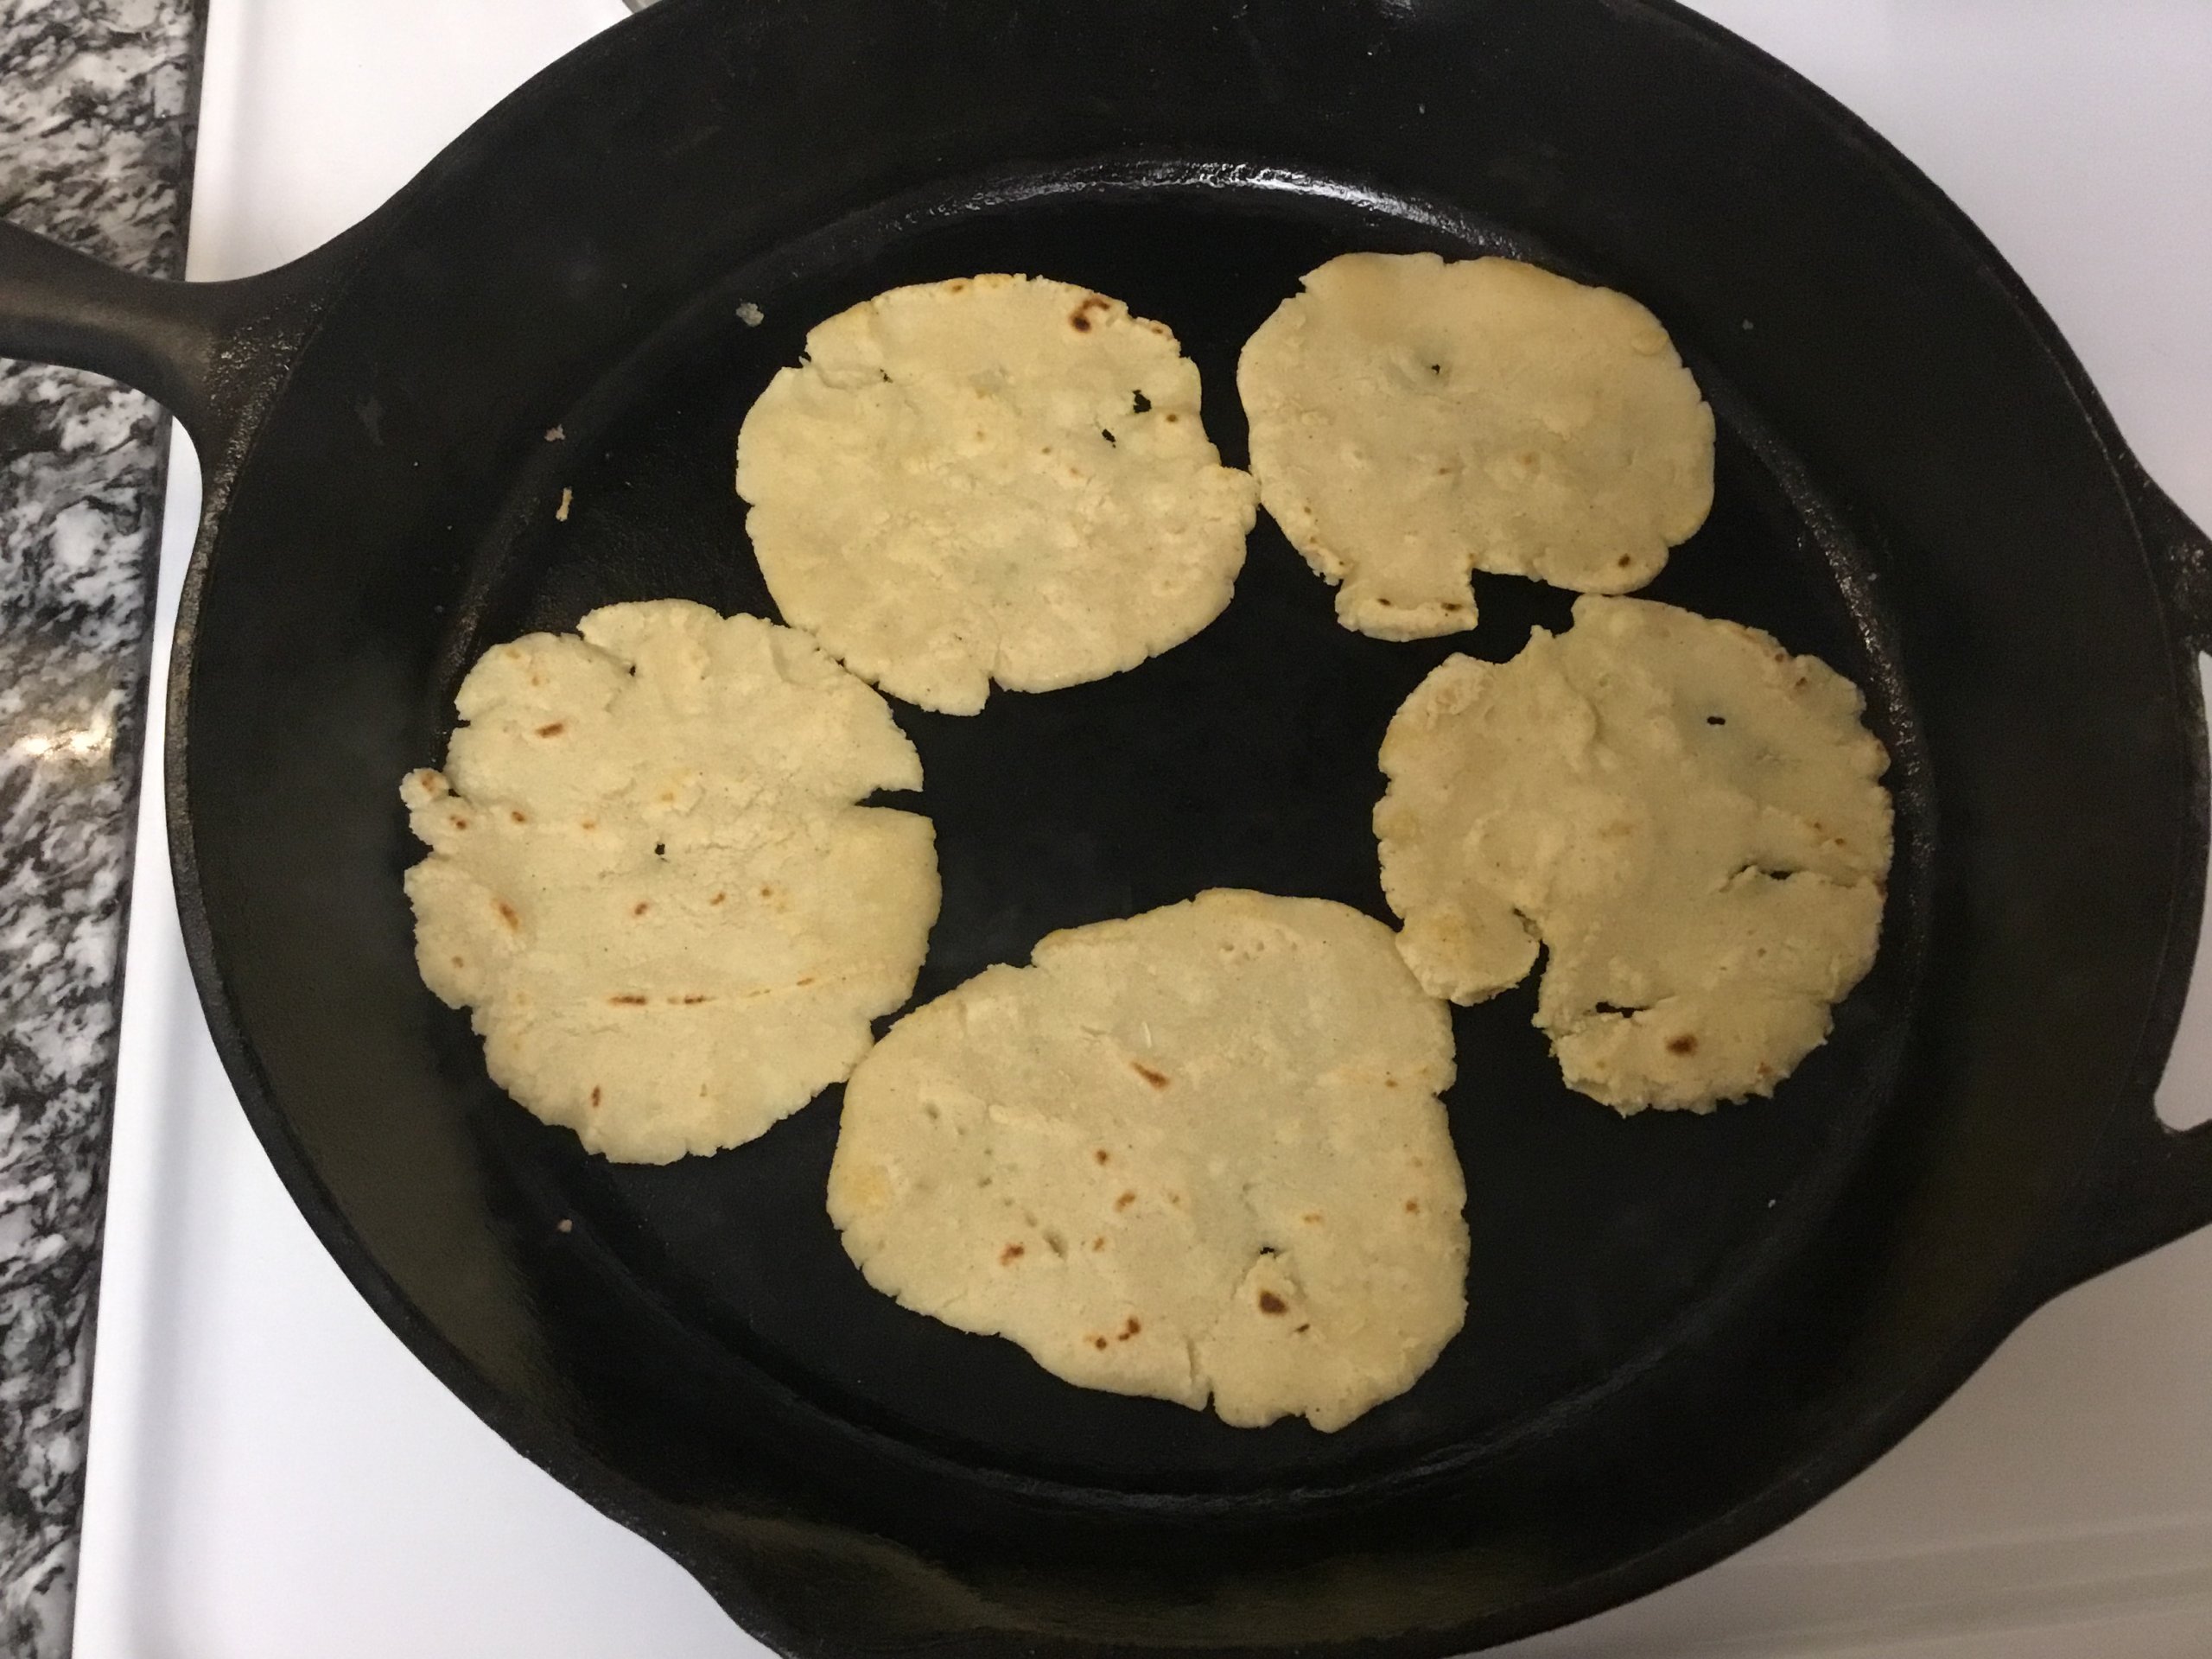 Homemade tortillas